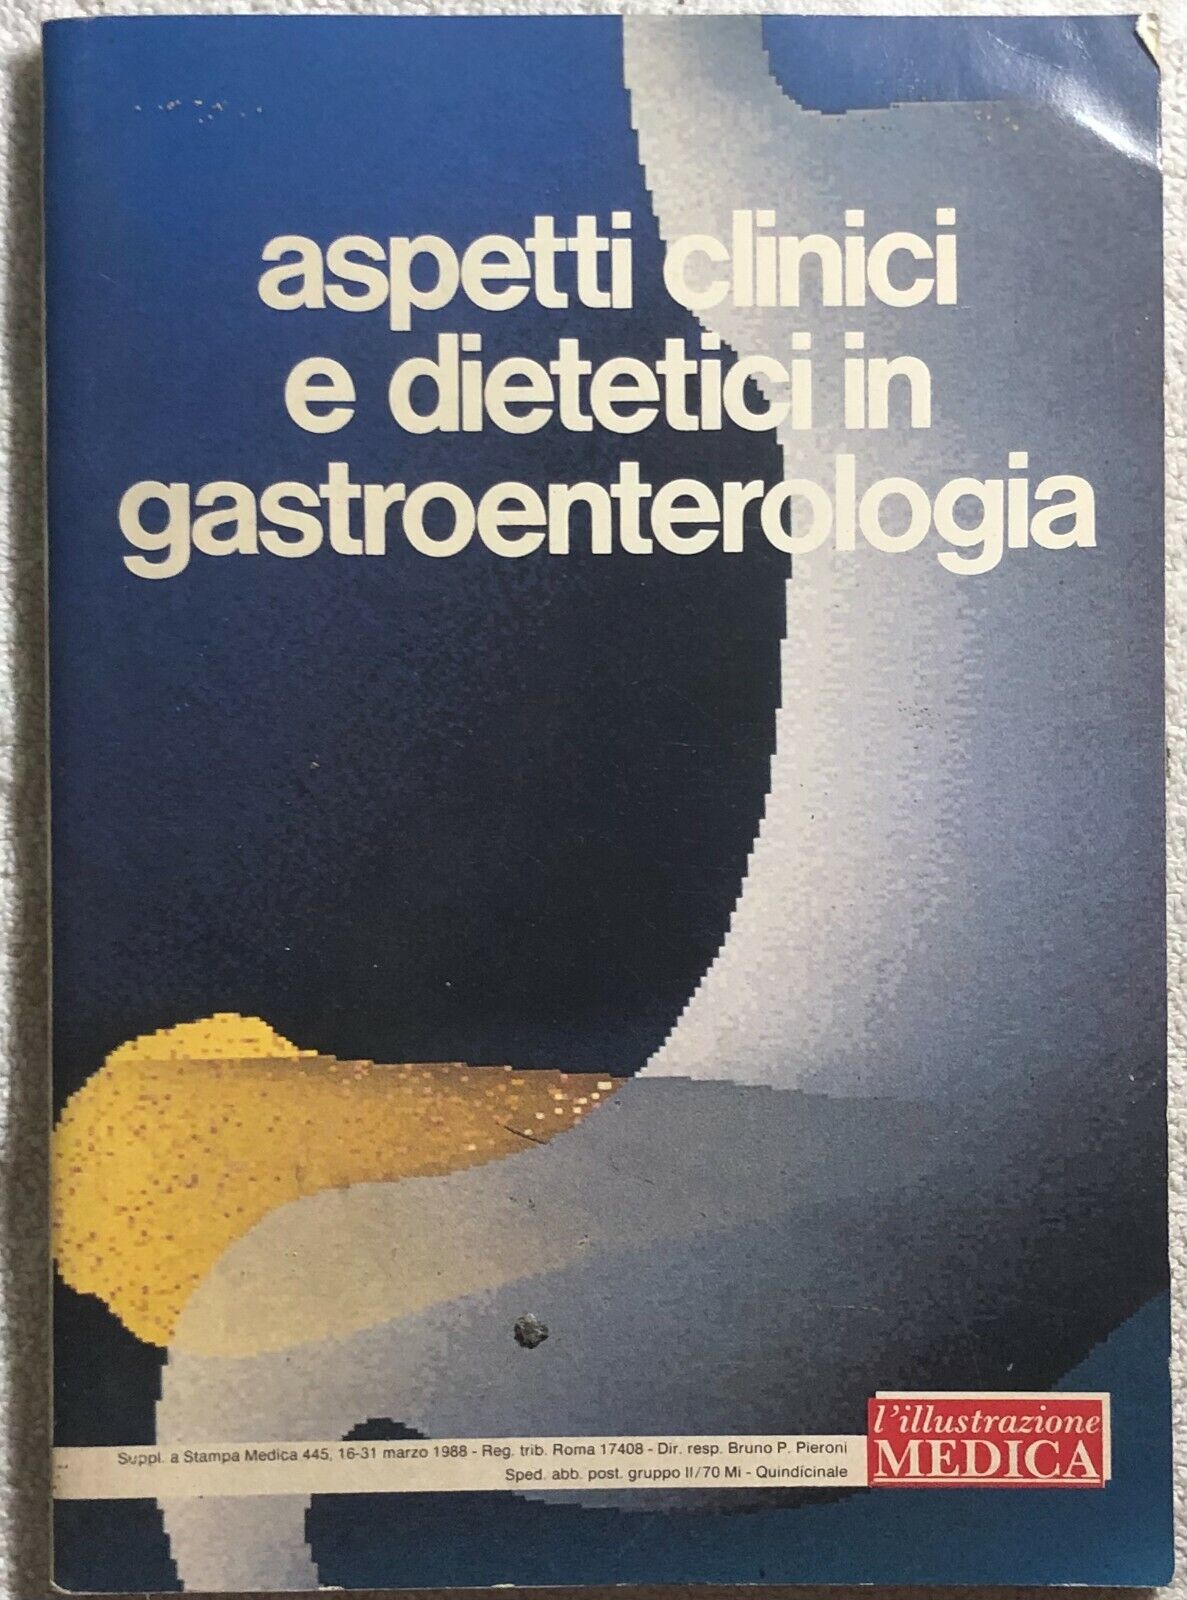 Aspetti clinici e dietetici in gastroenterologia di Aa.vv.,  1985,  Esi Stampa M